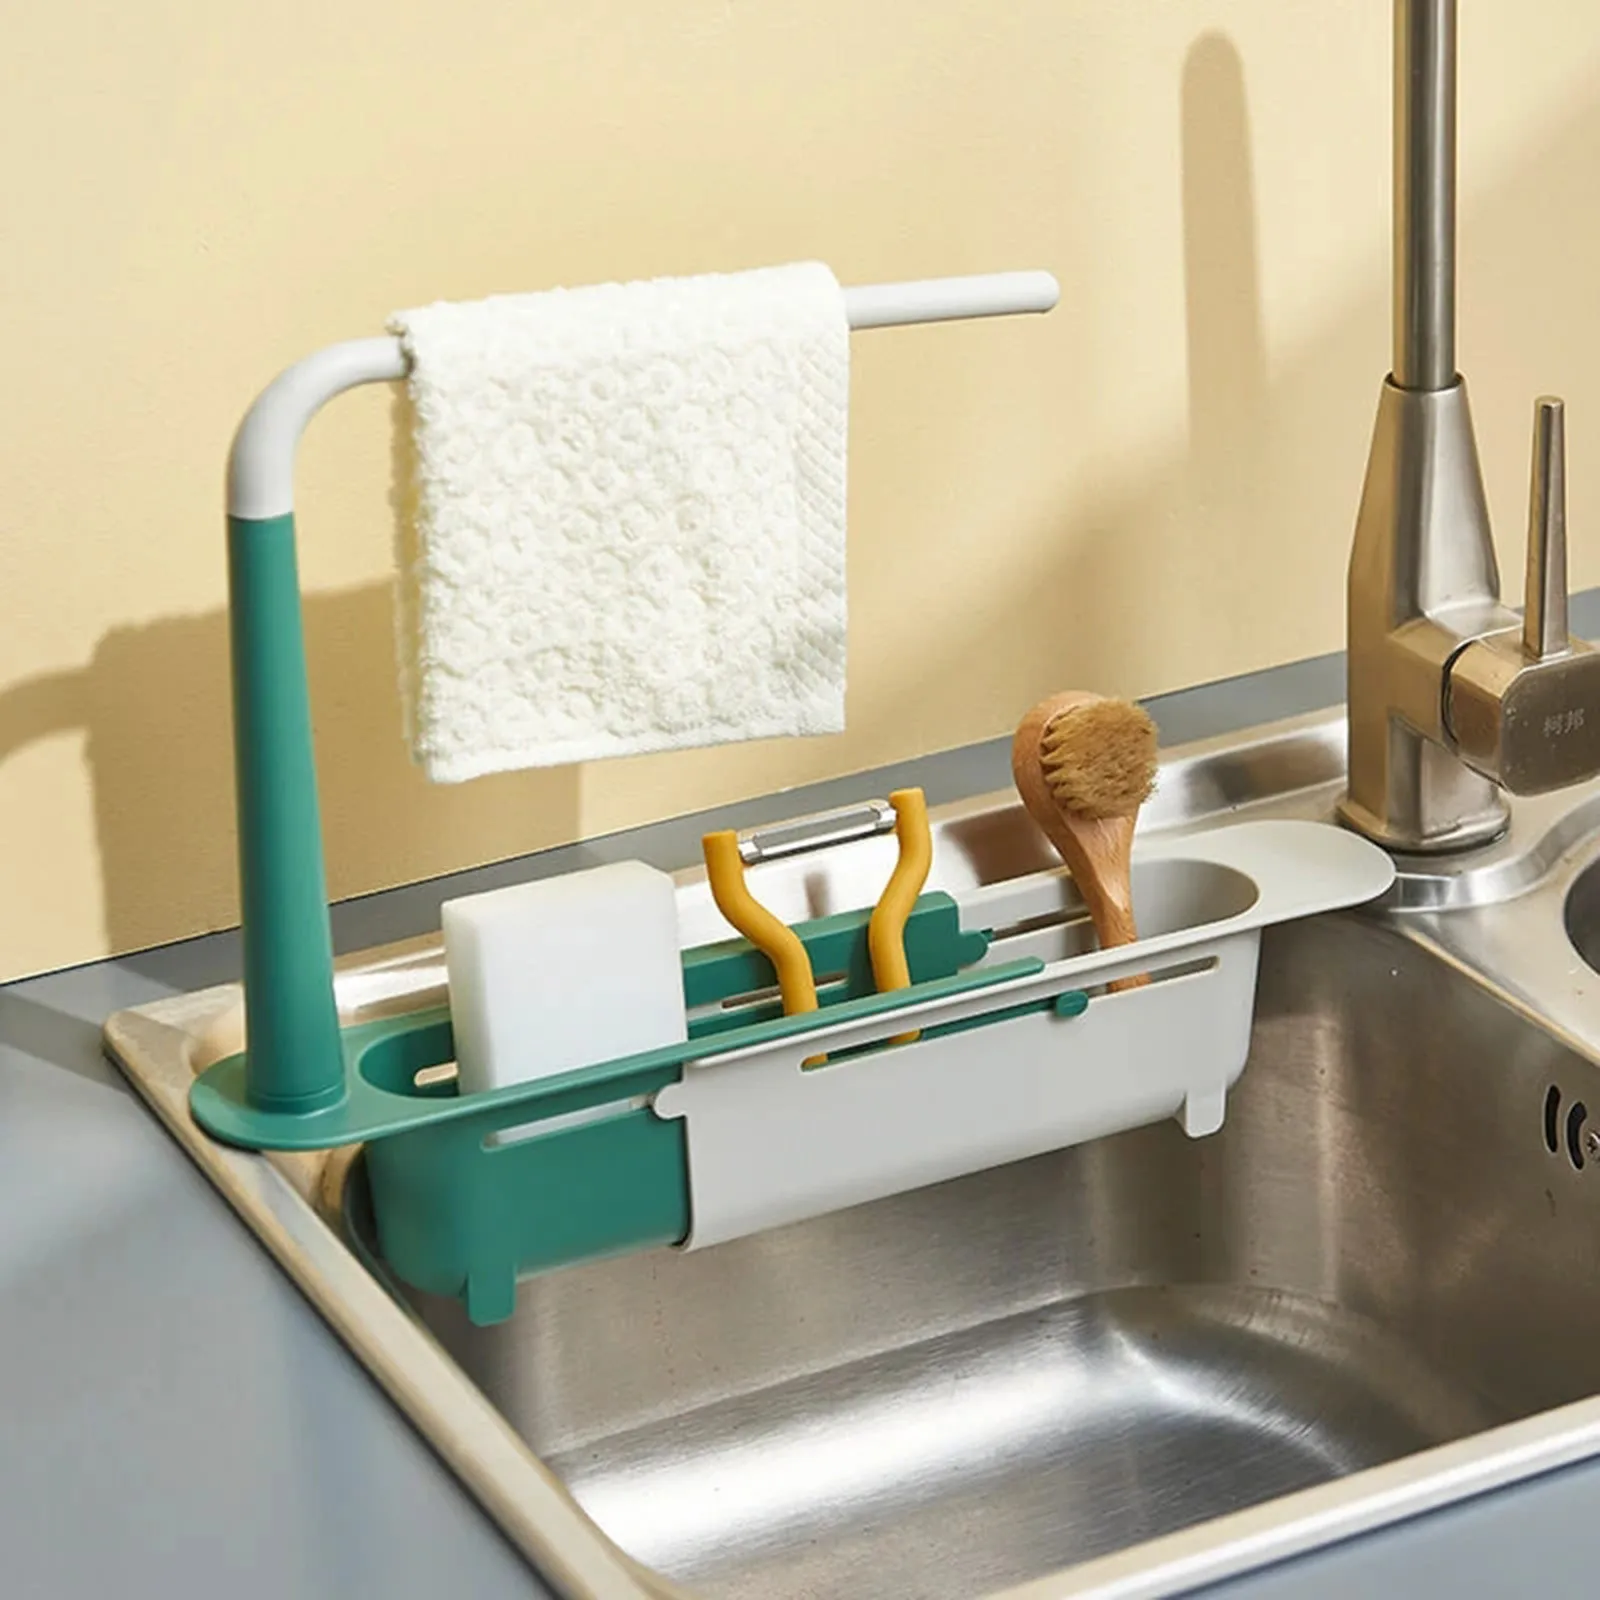 Details about   Telescopic Sink Rack Holder Expandable Storage Drain Sponge Basket Home Kitchen 